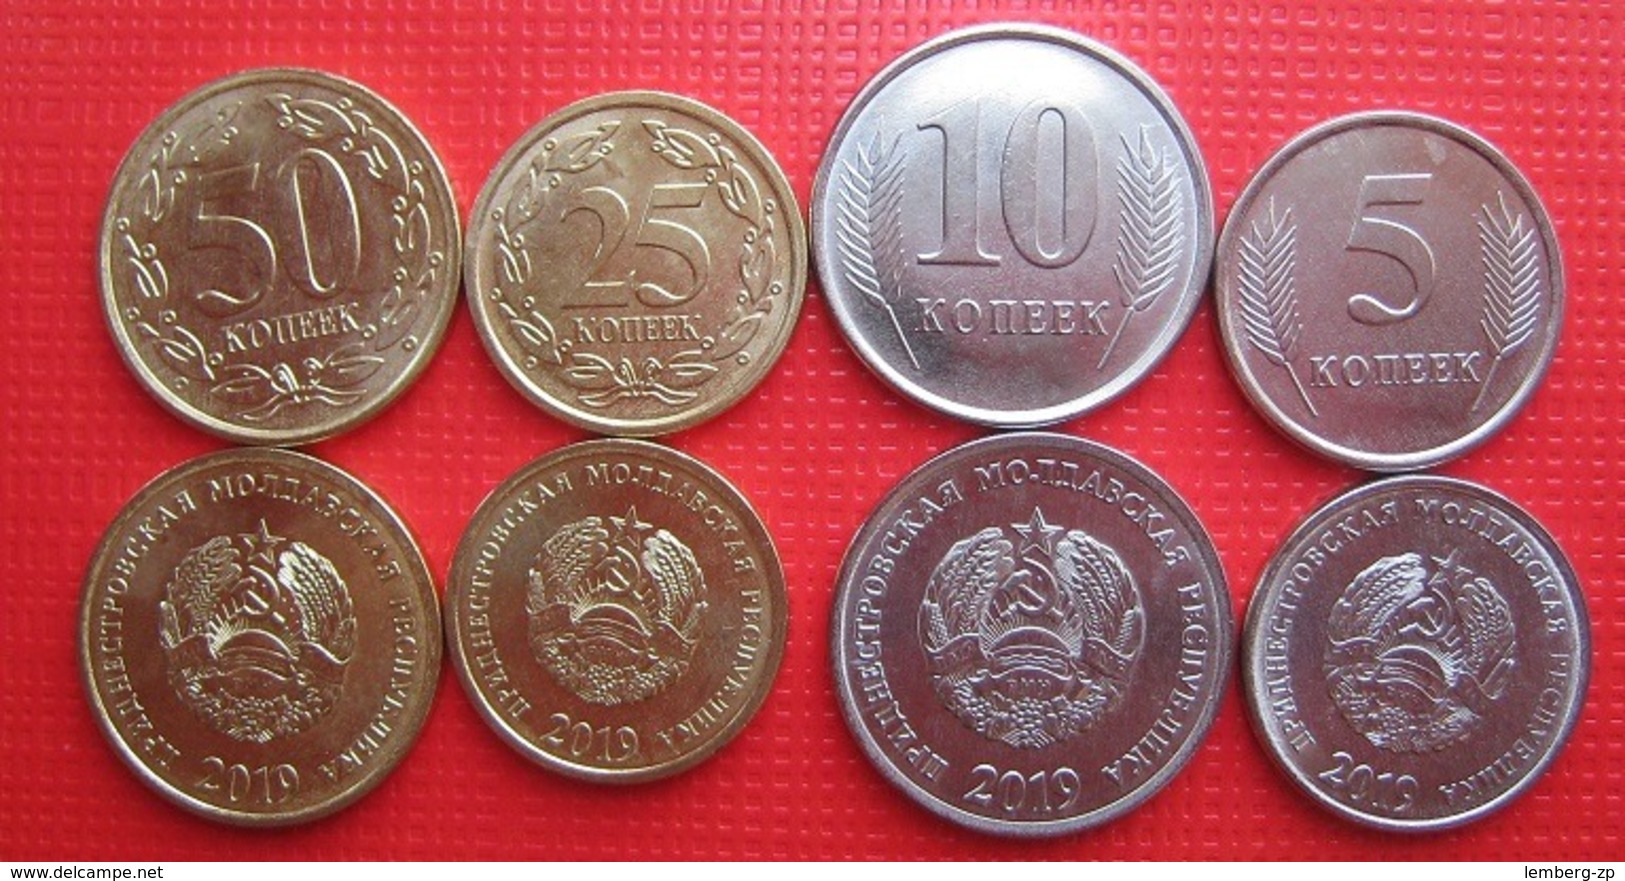 Transnistria - Set 4 Coins 5 10 25 50 Kopecks 2019 UNC Magnetic Lemberg-Zp - Moldova